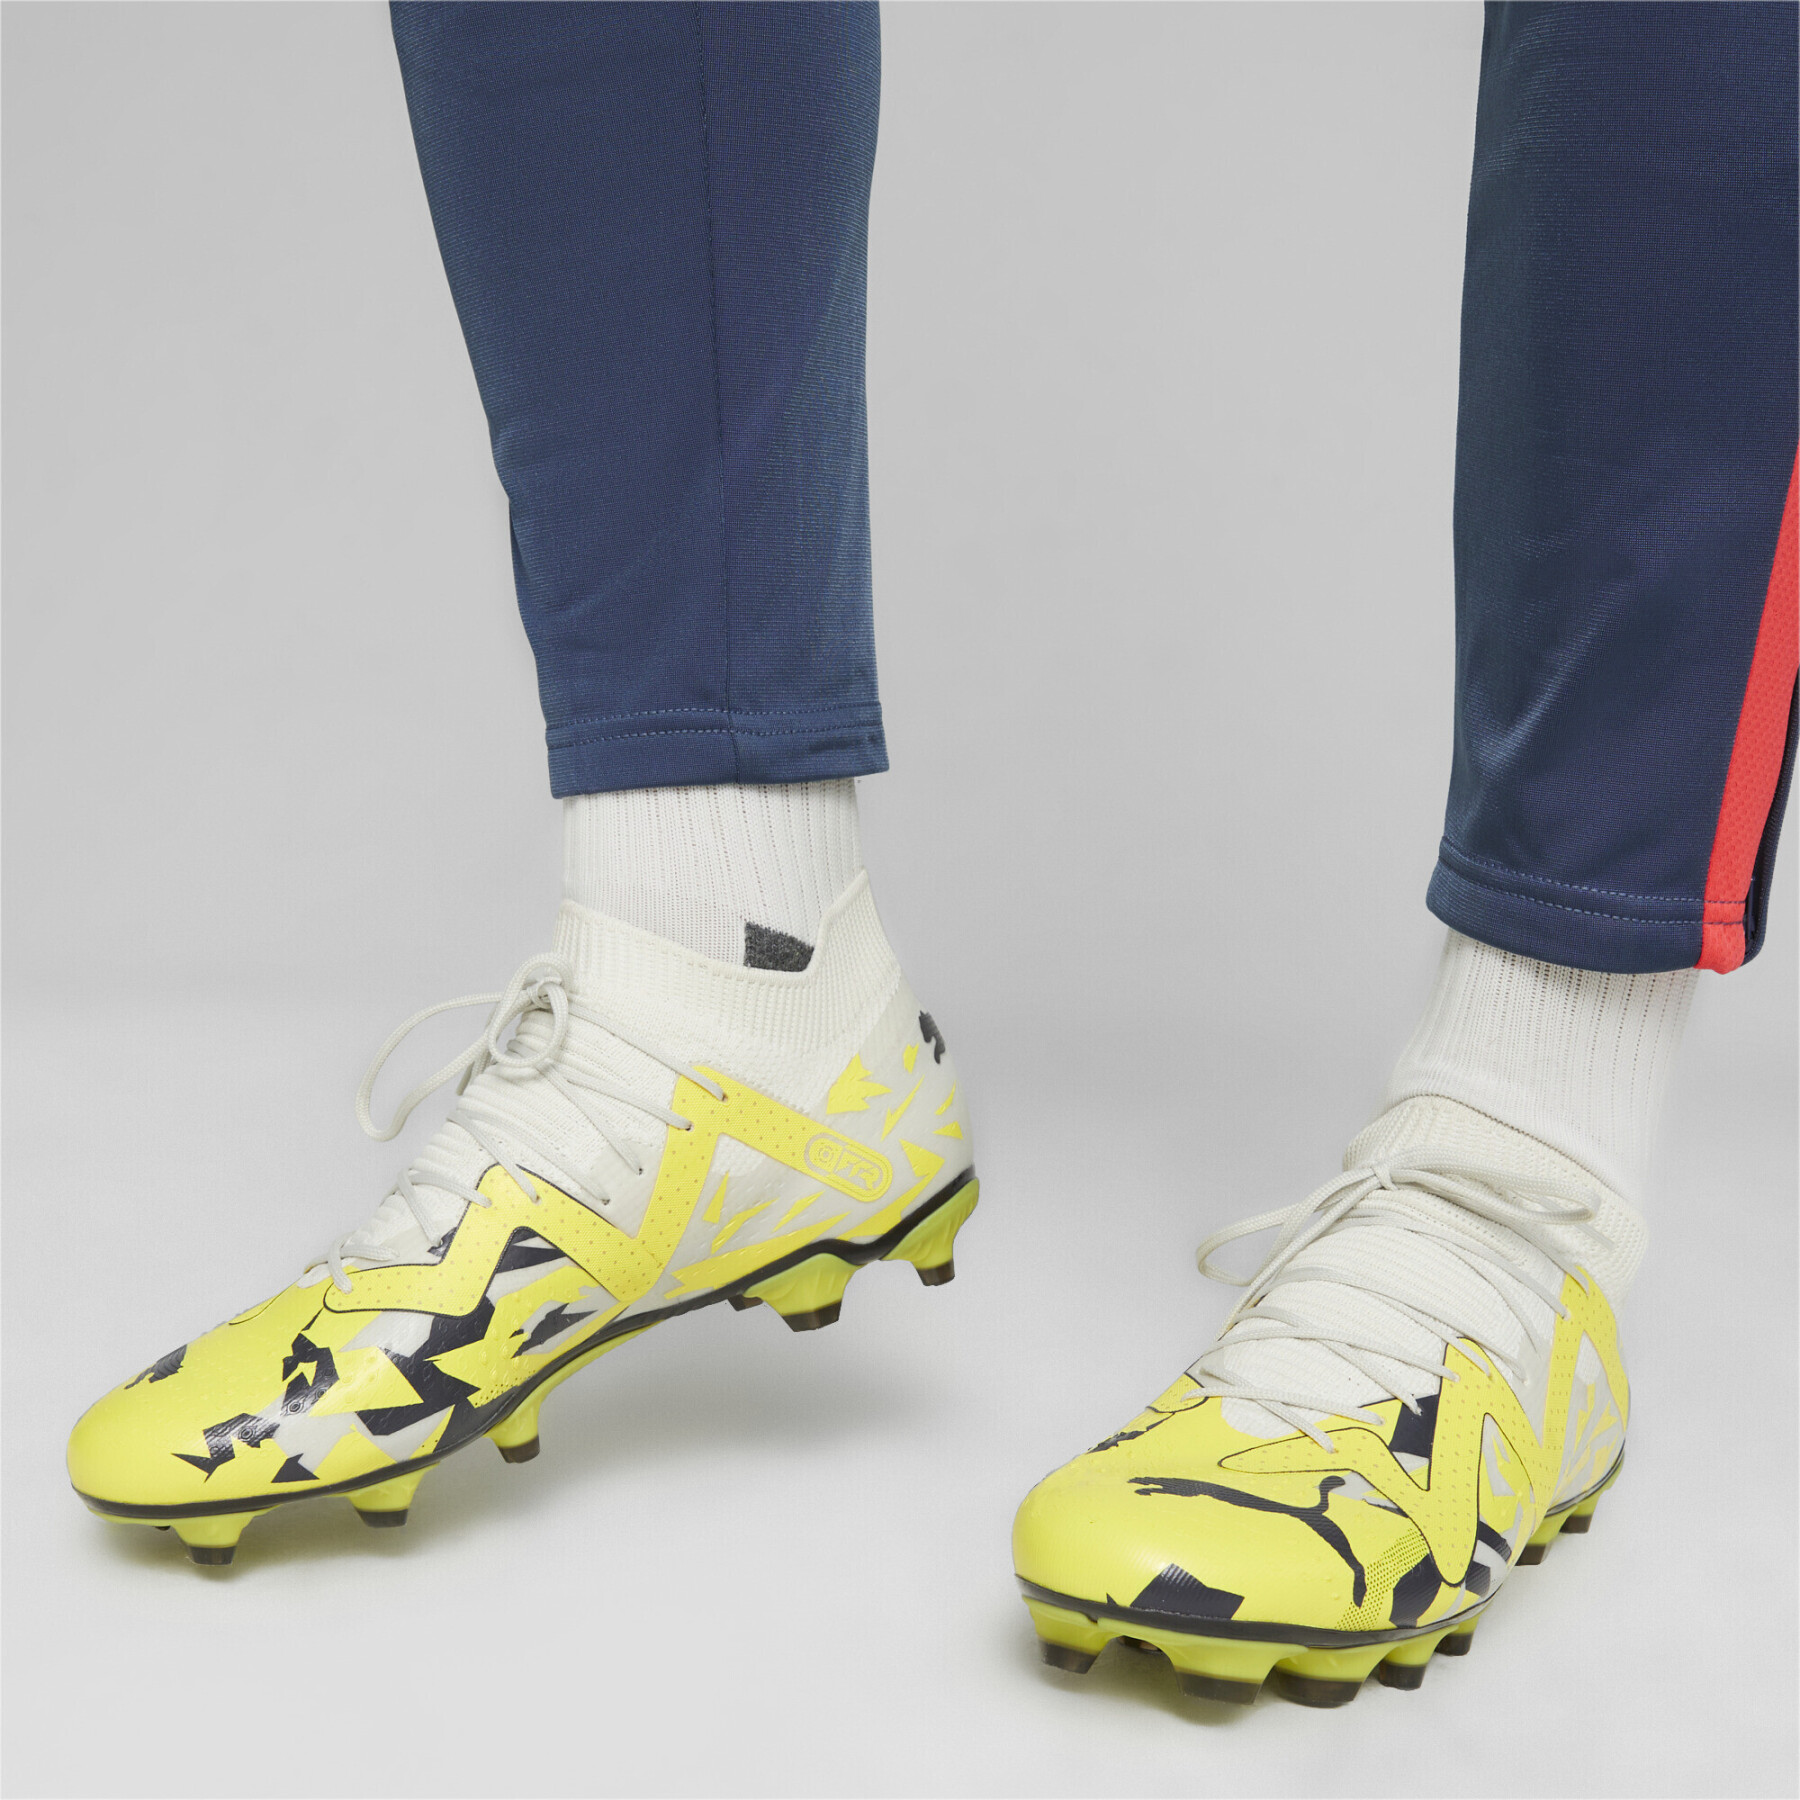 Soccer shoes Puma Future Match FG/AG - Voltage Pack